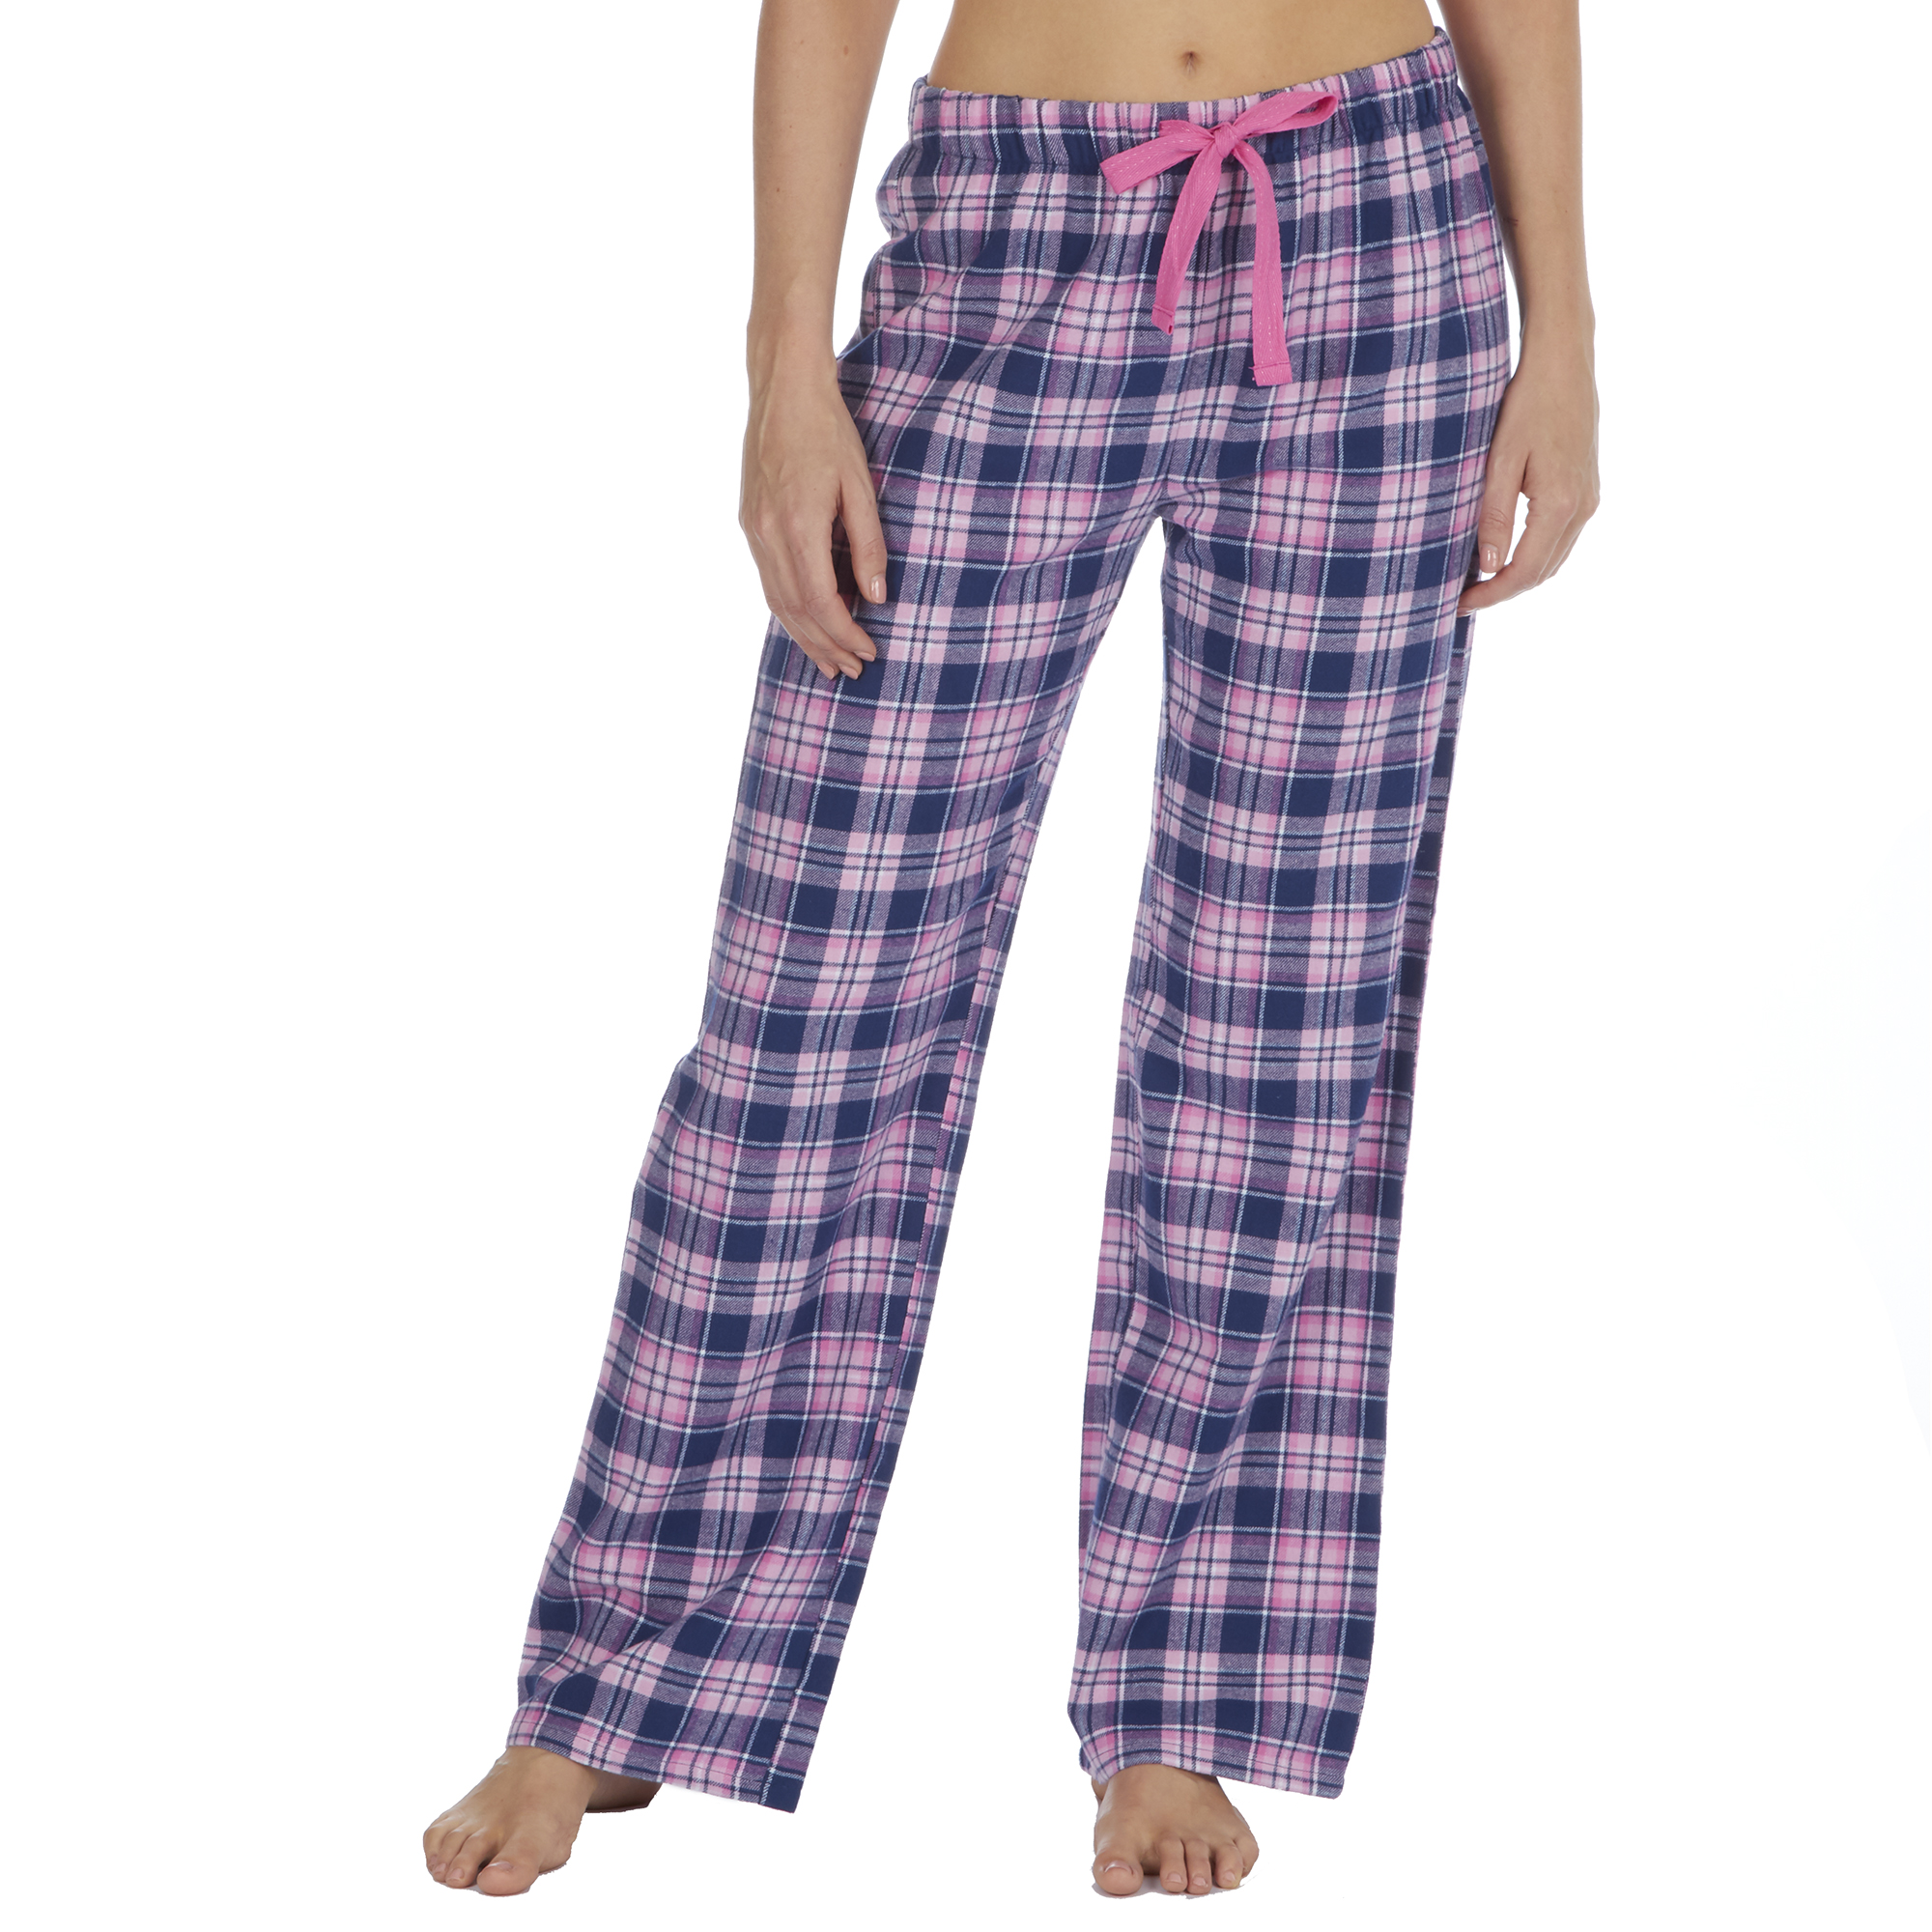 Ladies Womens Pyjama Pants Nightwear Lounge Cotton Check Pattern Flannel Thermal  eBay